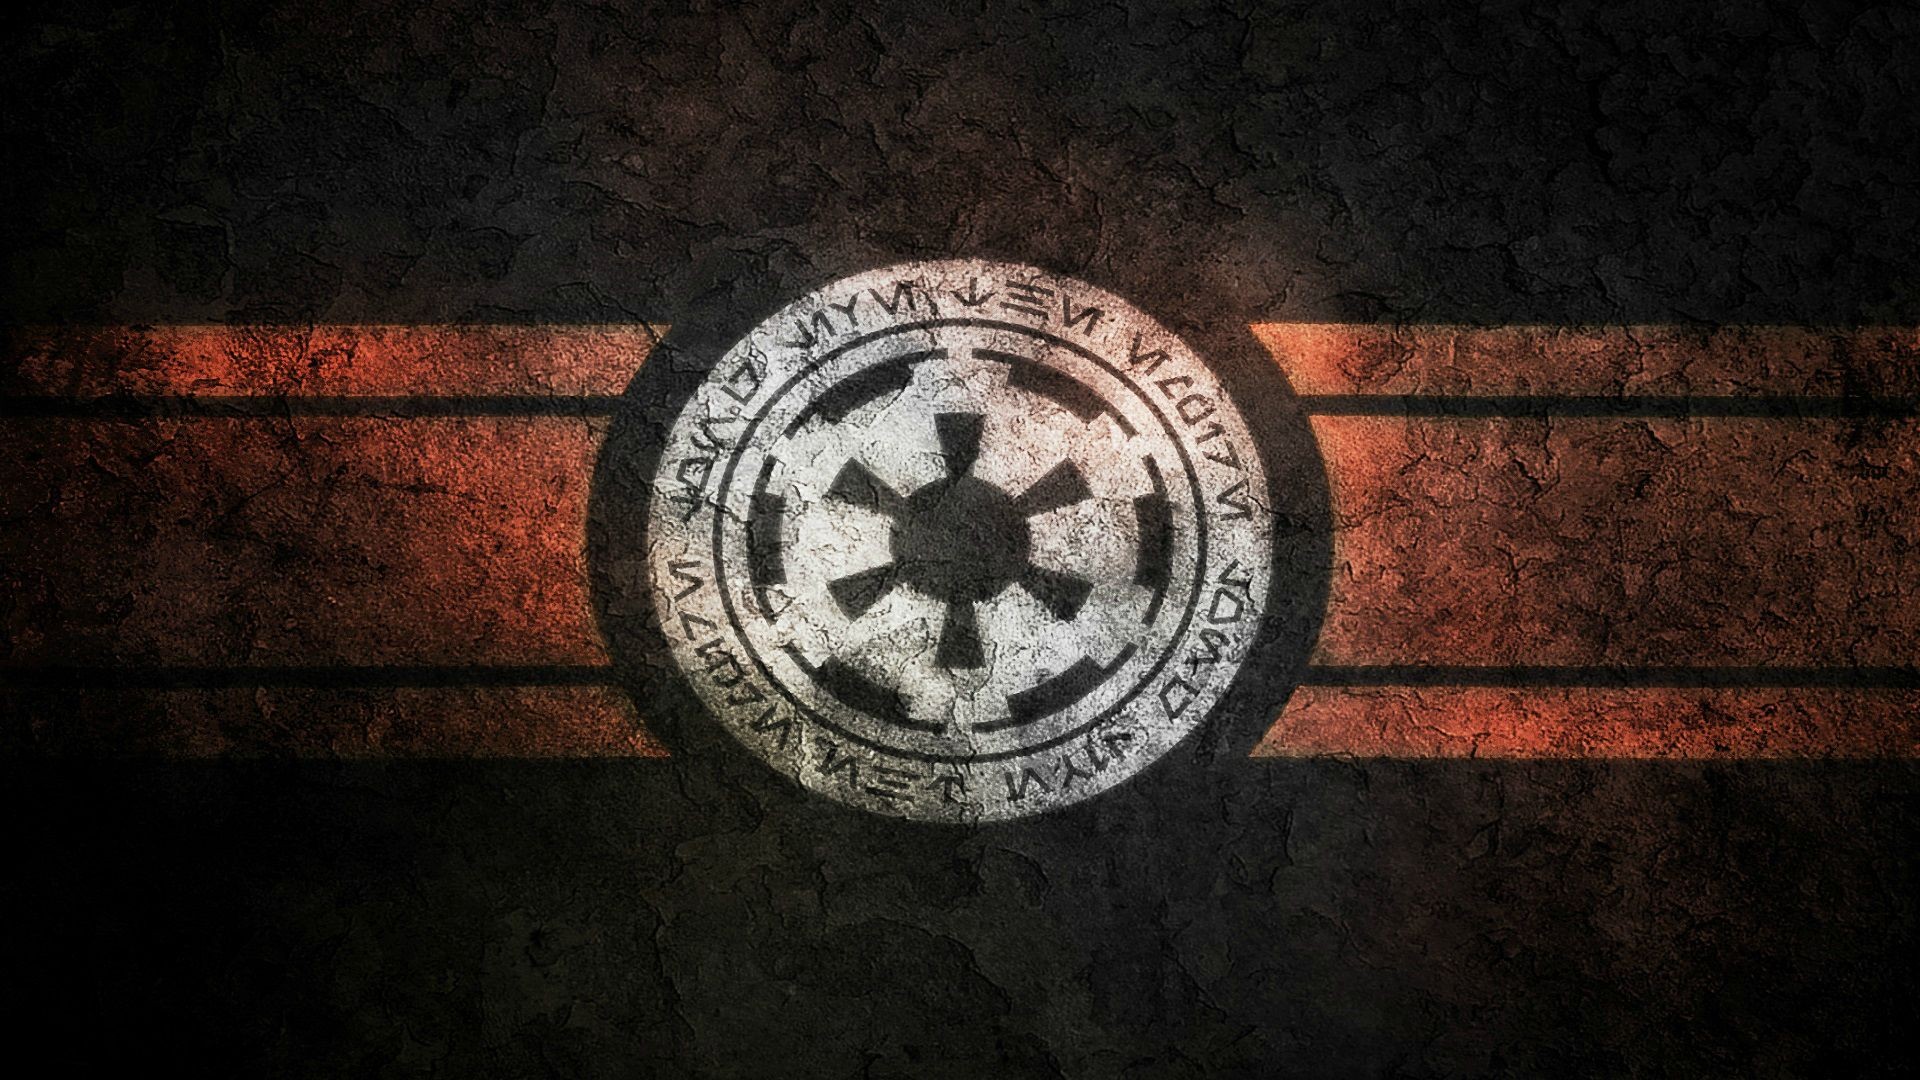 General 1920x1080 Star Wars logo grunge artwork science fiction